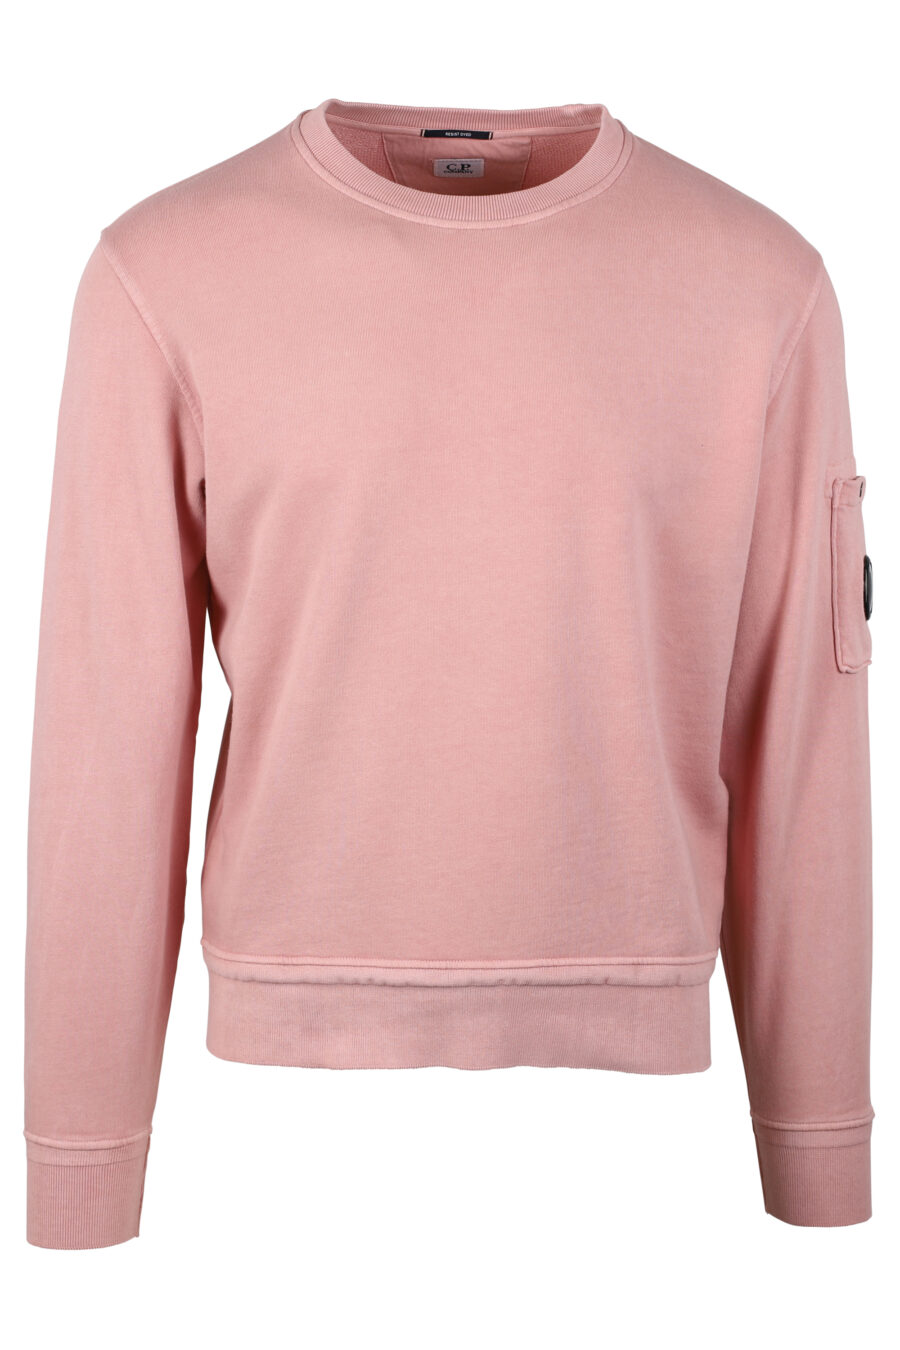 Rosa Sweatshirt mit Fleecefutter und kreisförmigem Mini-Logo - IMG 4706